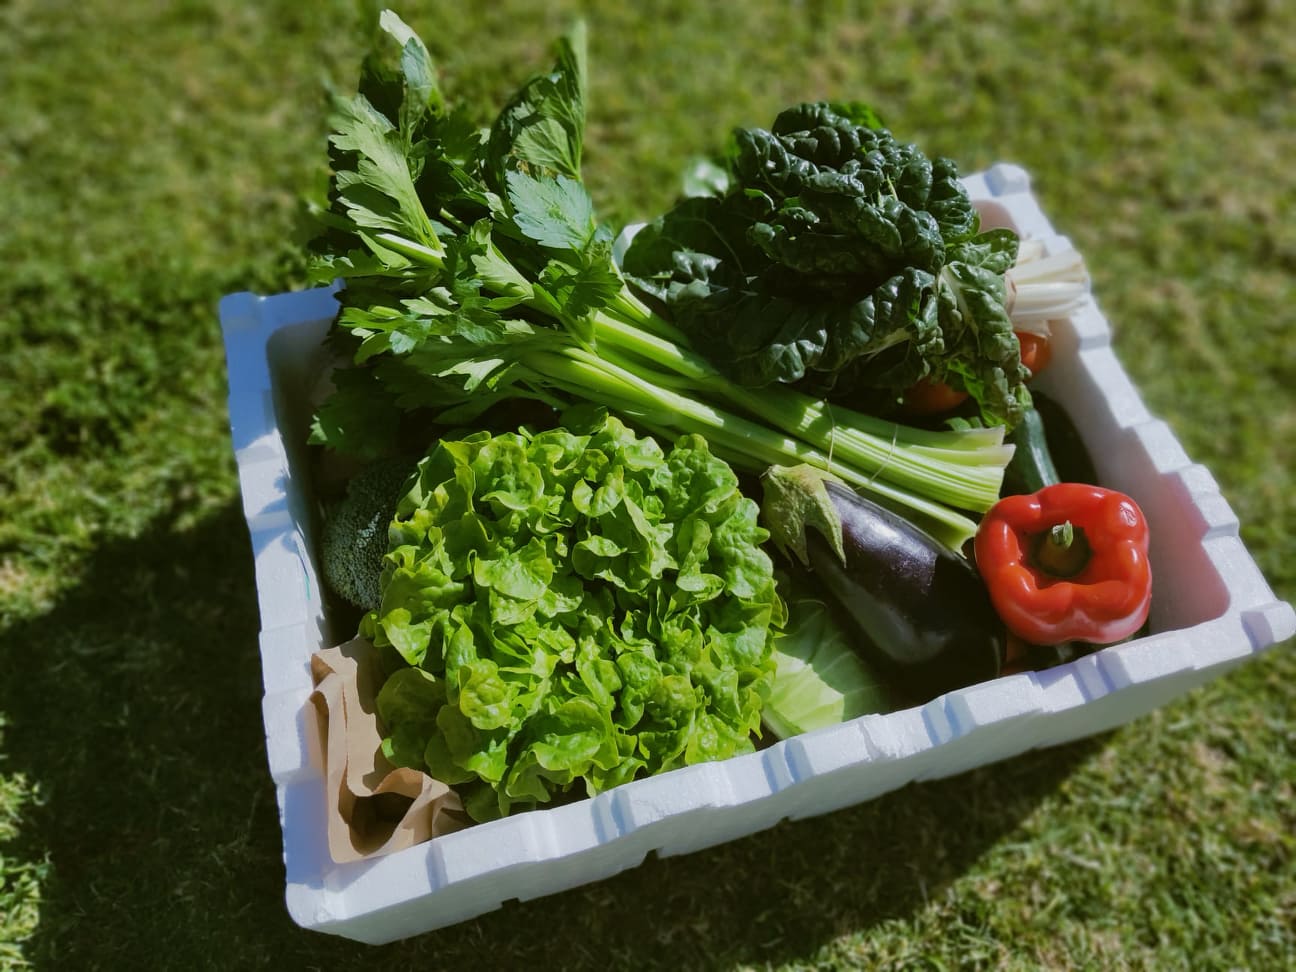 Mini Vegetable Box